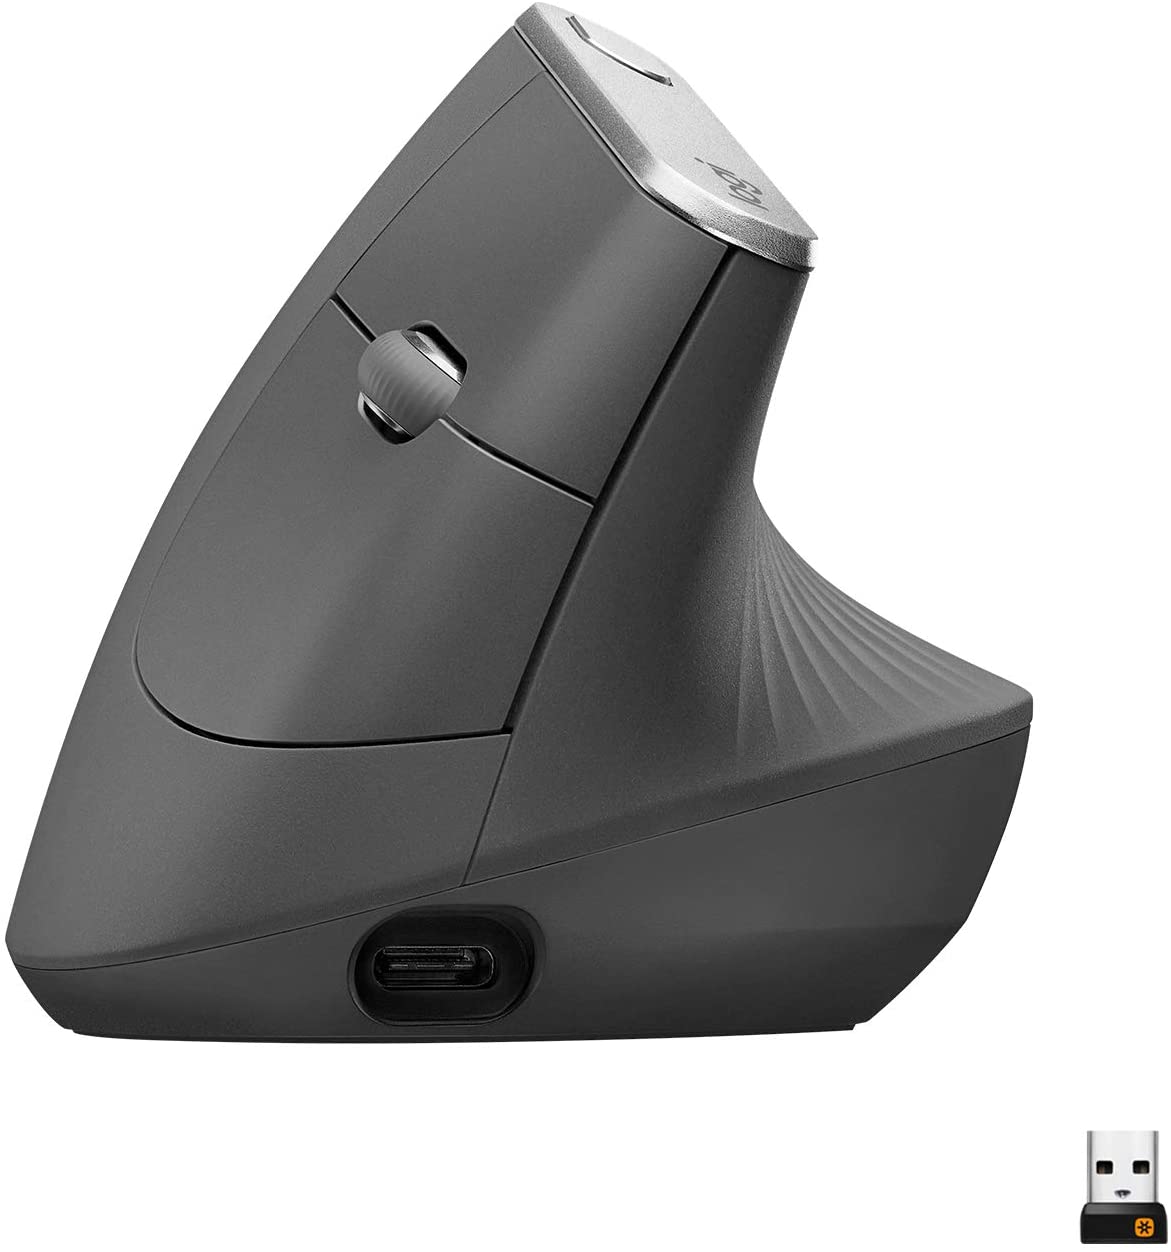 Logitech MX Vertical Advanced Ergonomic Mouse (910-005448)0